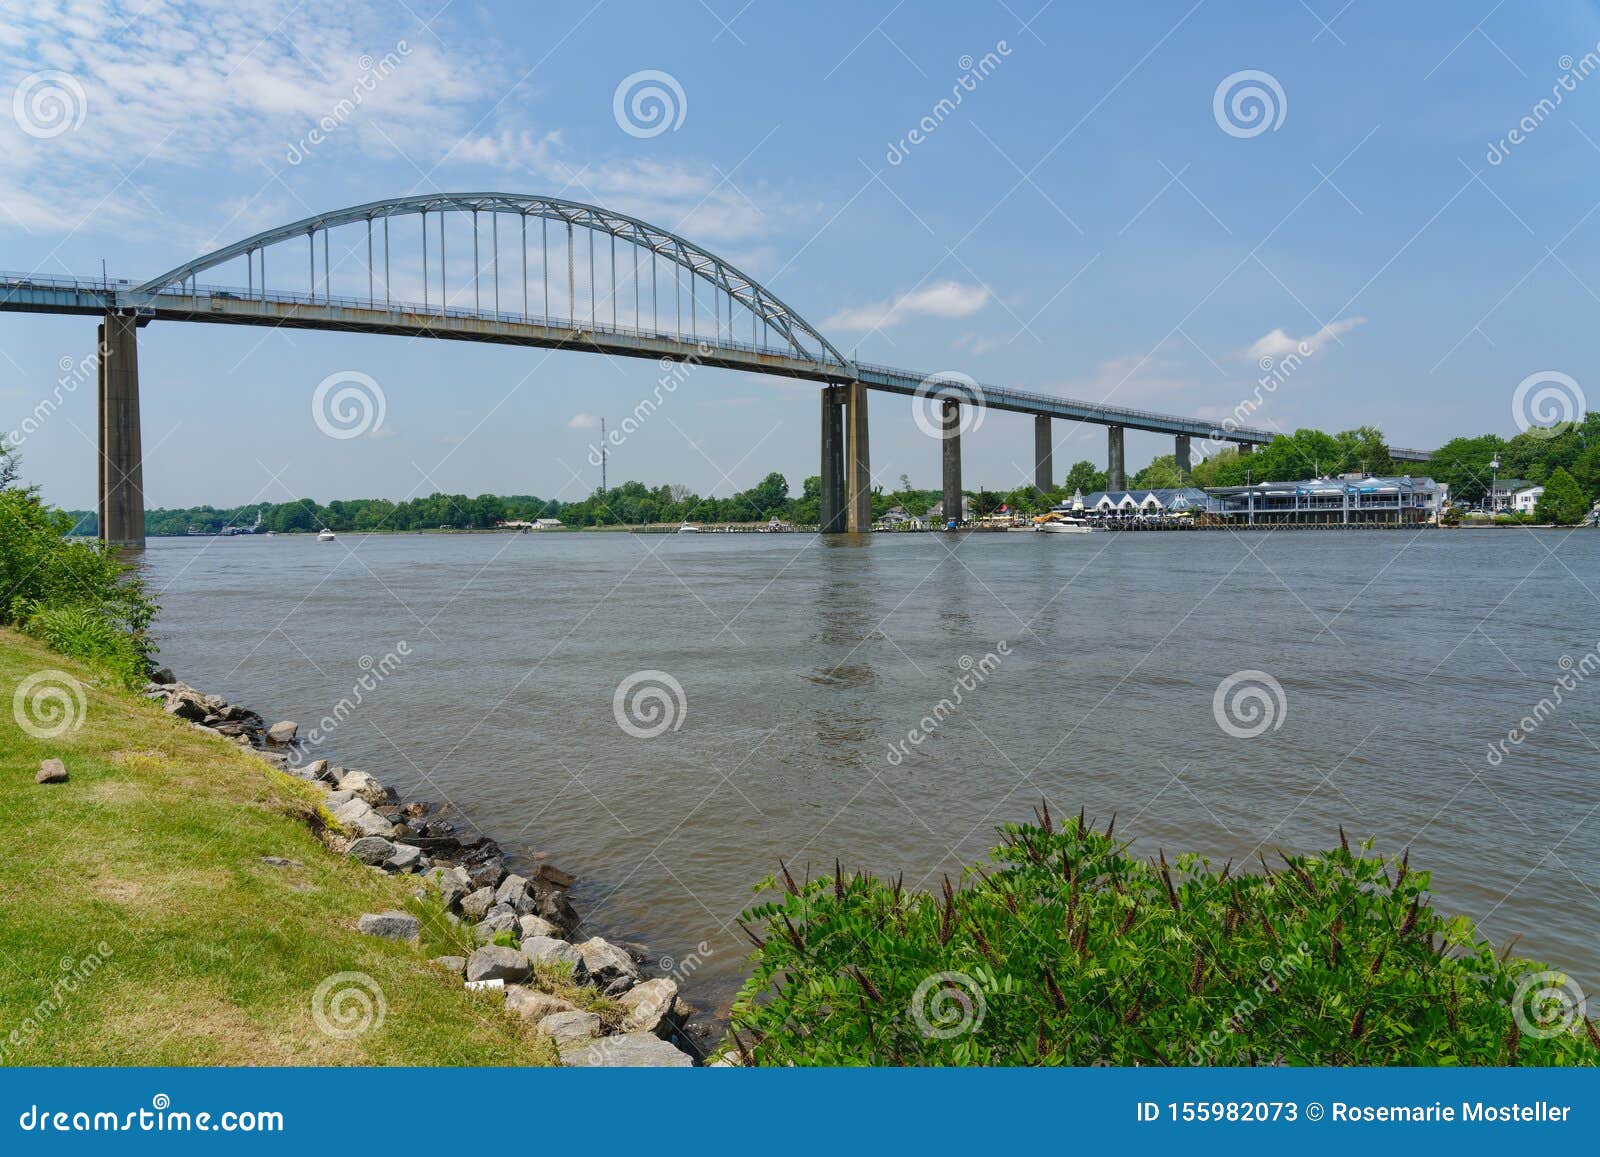 the chesapeake city bridge over the chesapeake & delaware canal in maryland